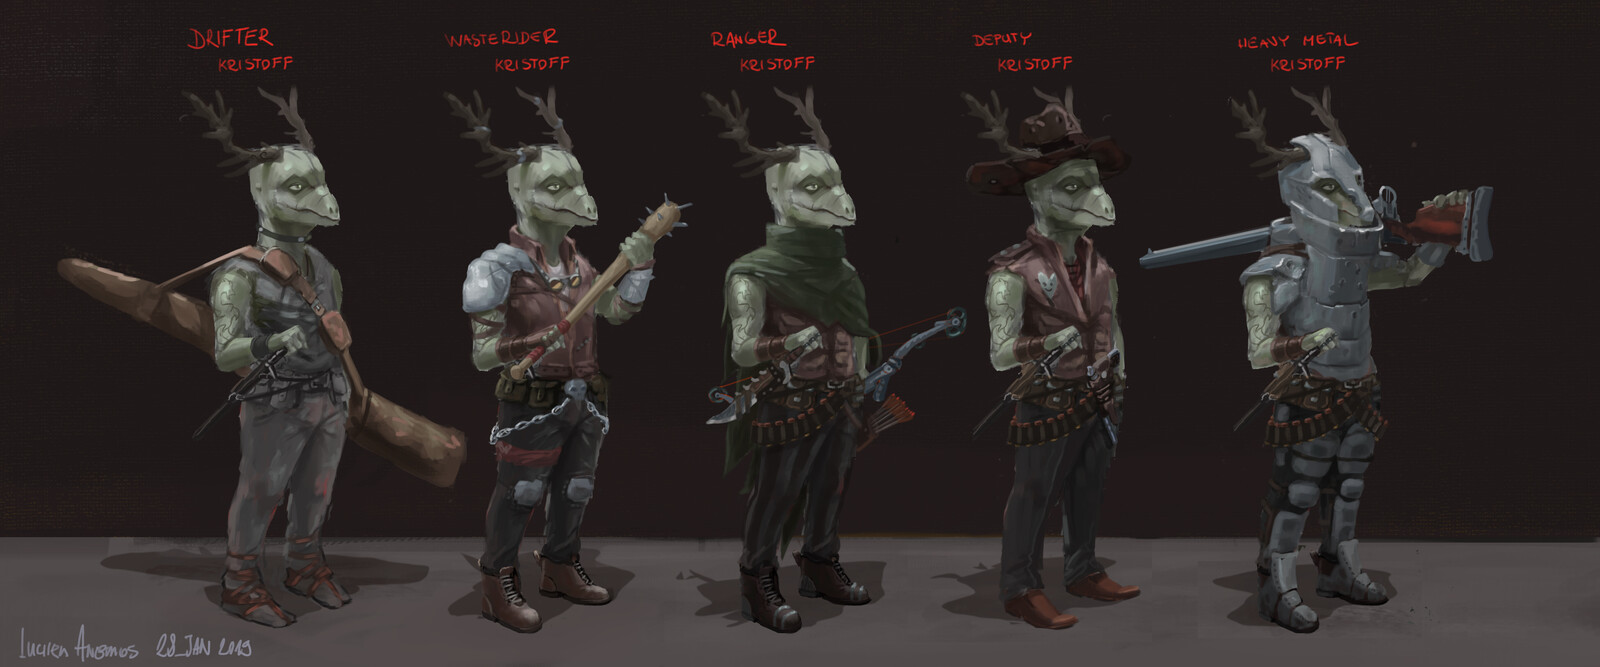 Dragonite bounty hunter concept